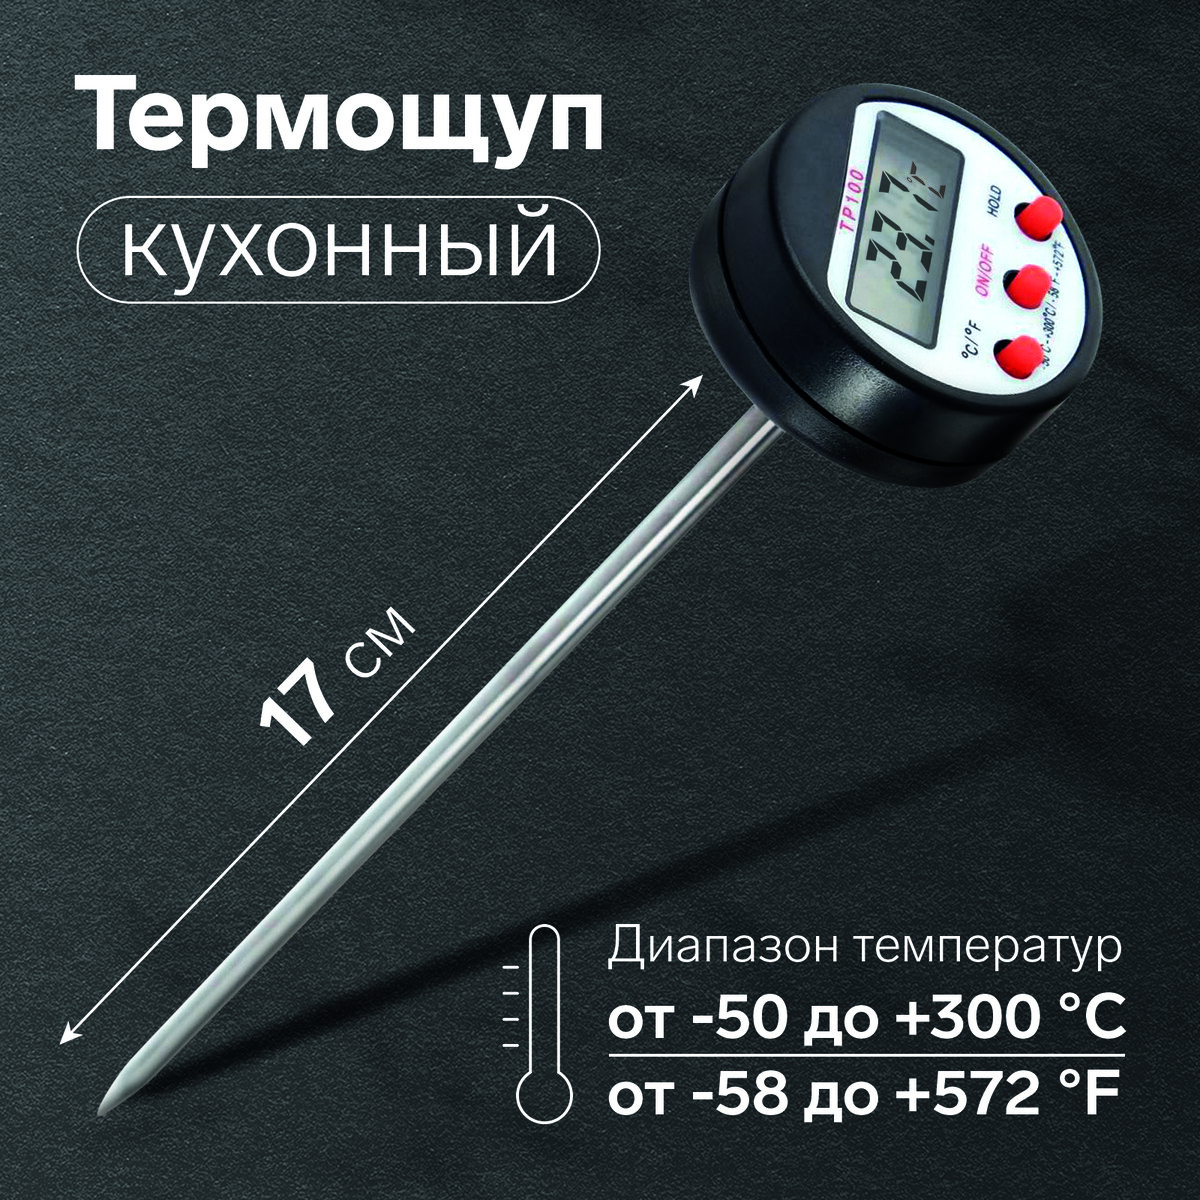 Термощуп кухонный tp-100, максимальная температура 300 °c, от lr44, черный термощуп кухонный jr 1 электронный